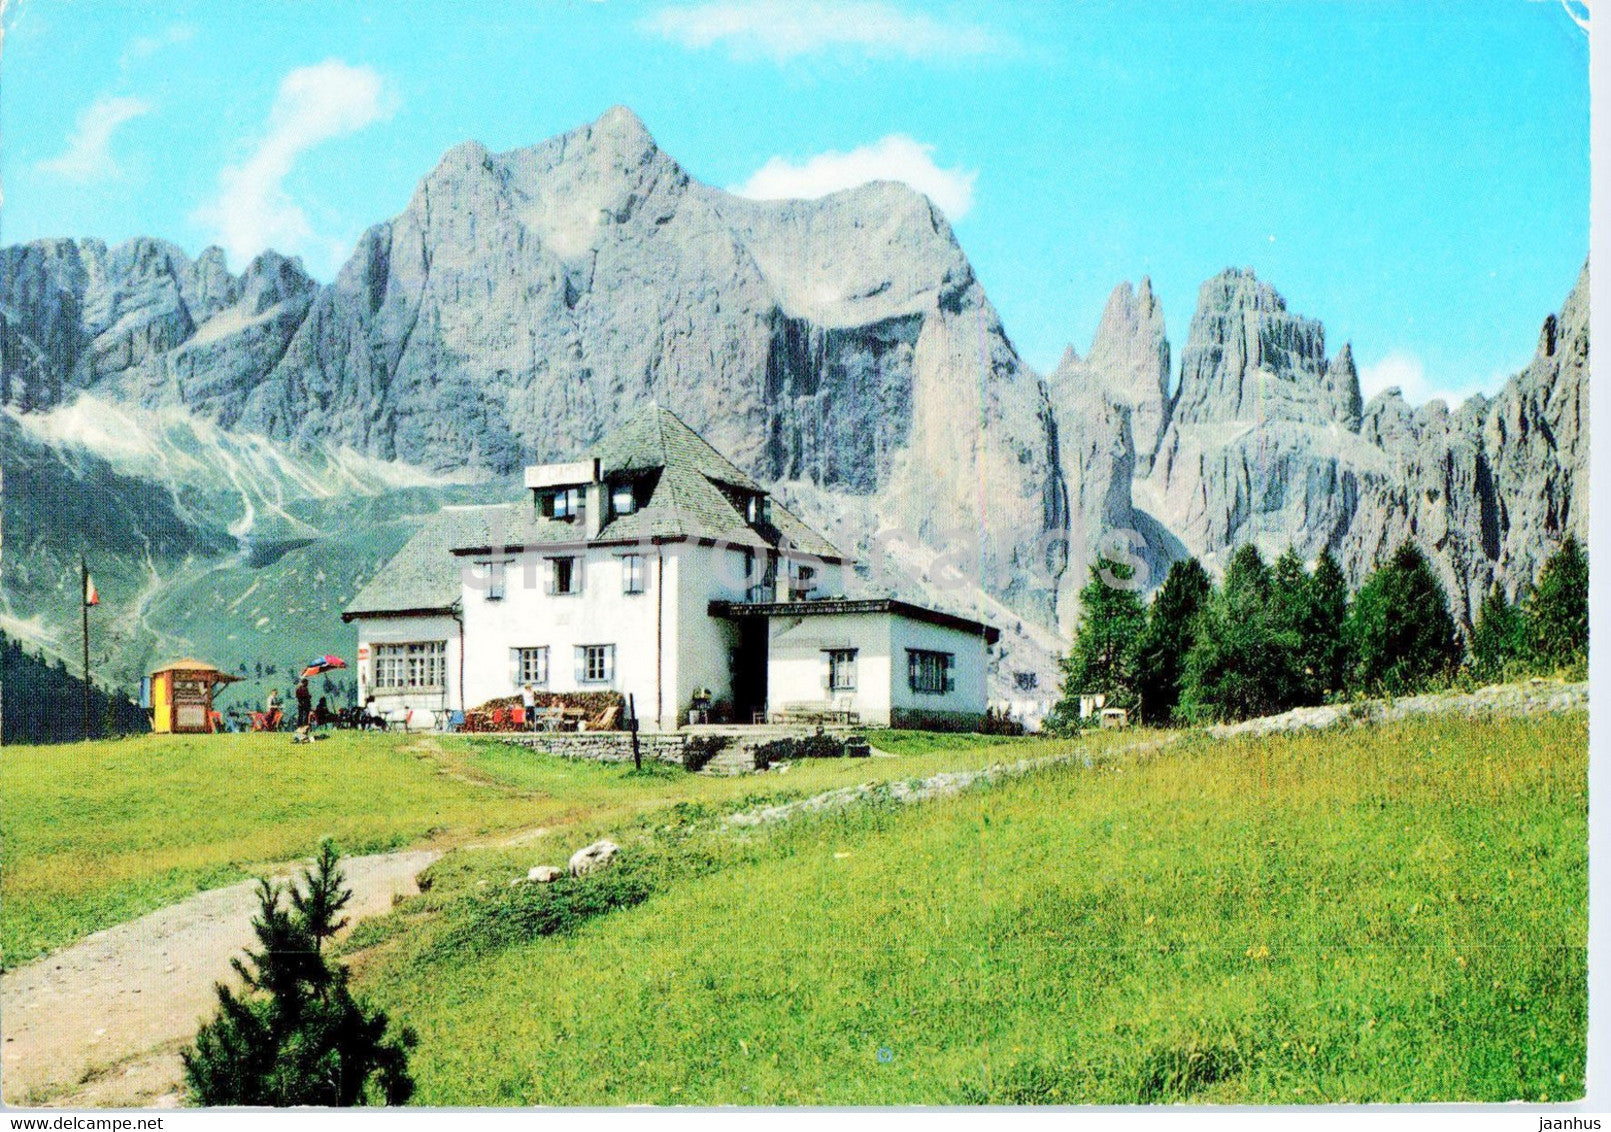 Gruppo del Catinaccio - Dolomiti - Val di Fassa - Rifugio Ciampedie - Torri del Vaiolet - Italy - unused - JH Postcards